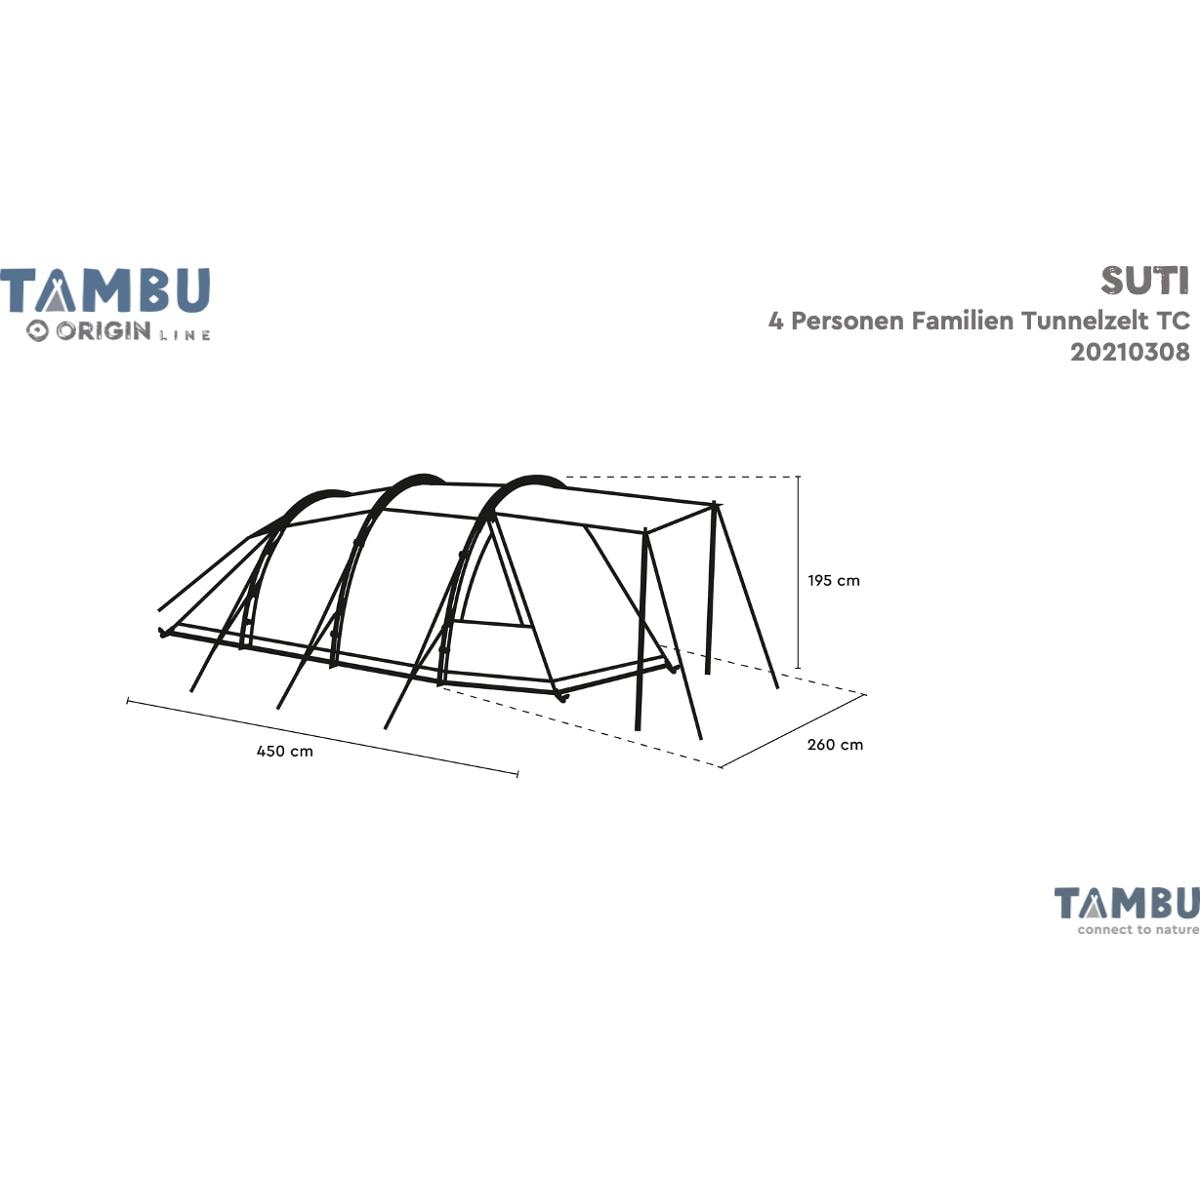 Tambu Suti Familien Tunnelzelt TC, 450x260x195cm, Campingzubehör bei Wagner 4 grau/blau Personen, Camping